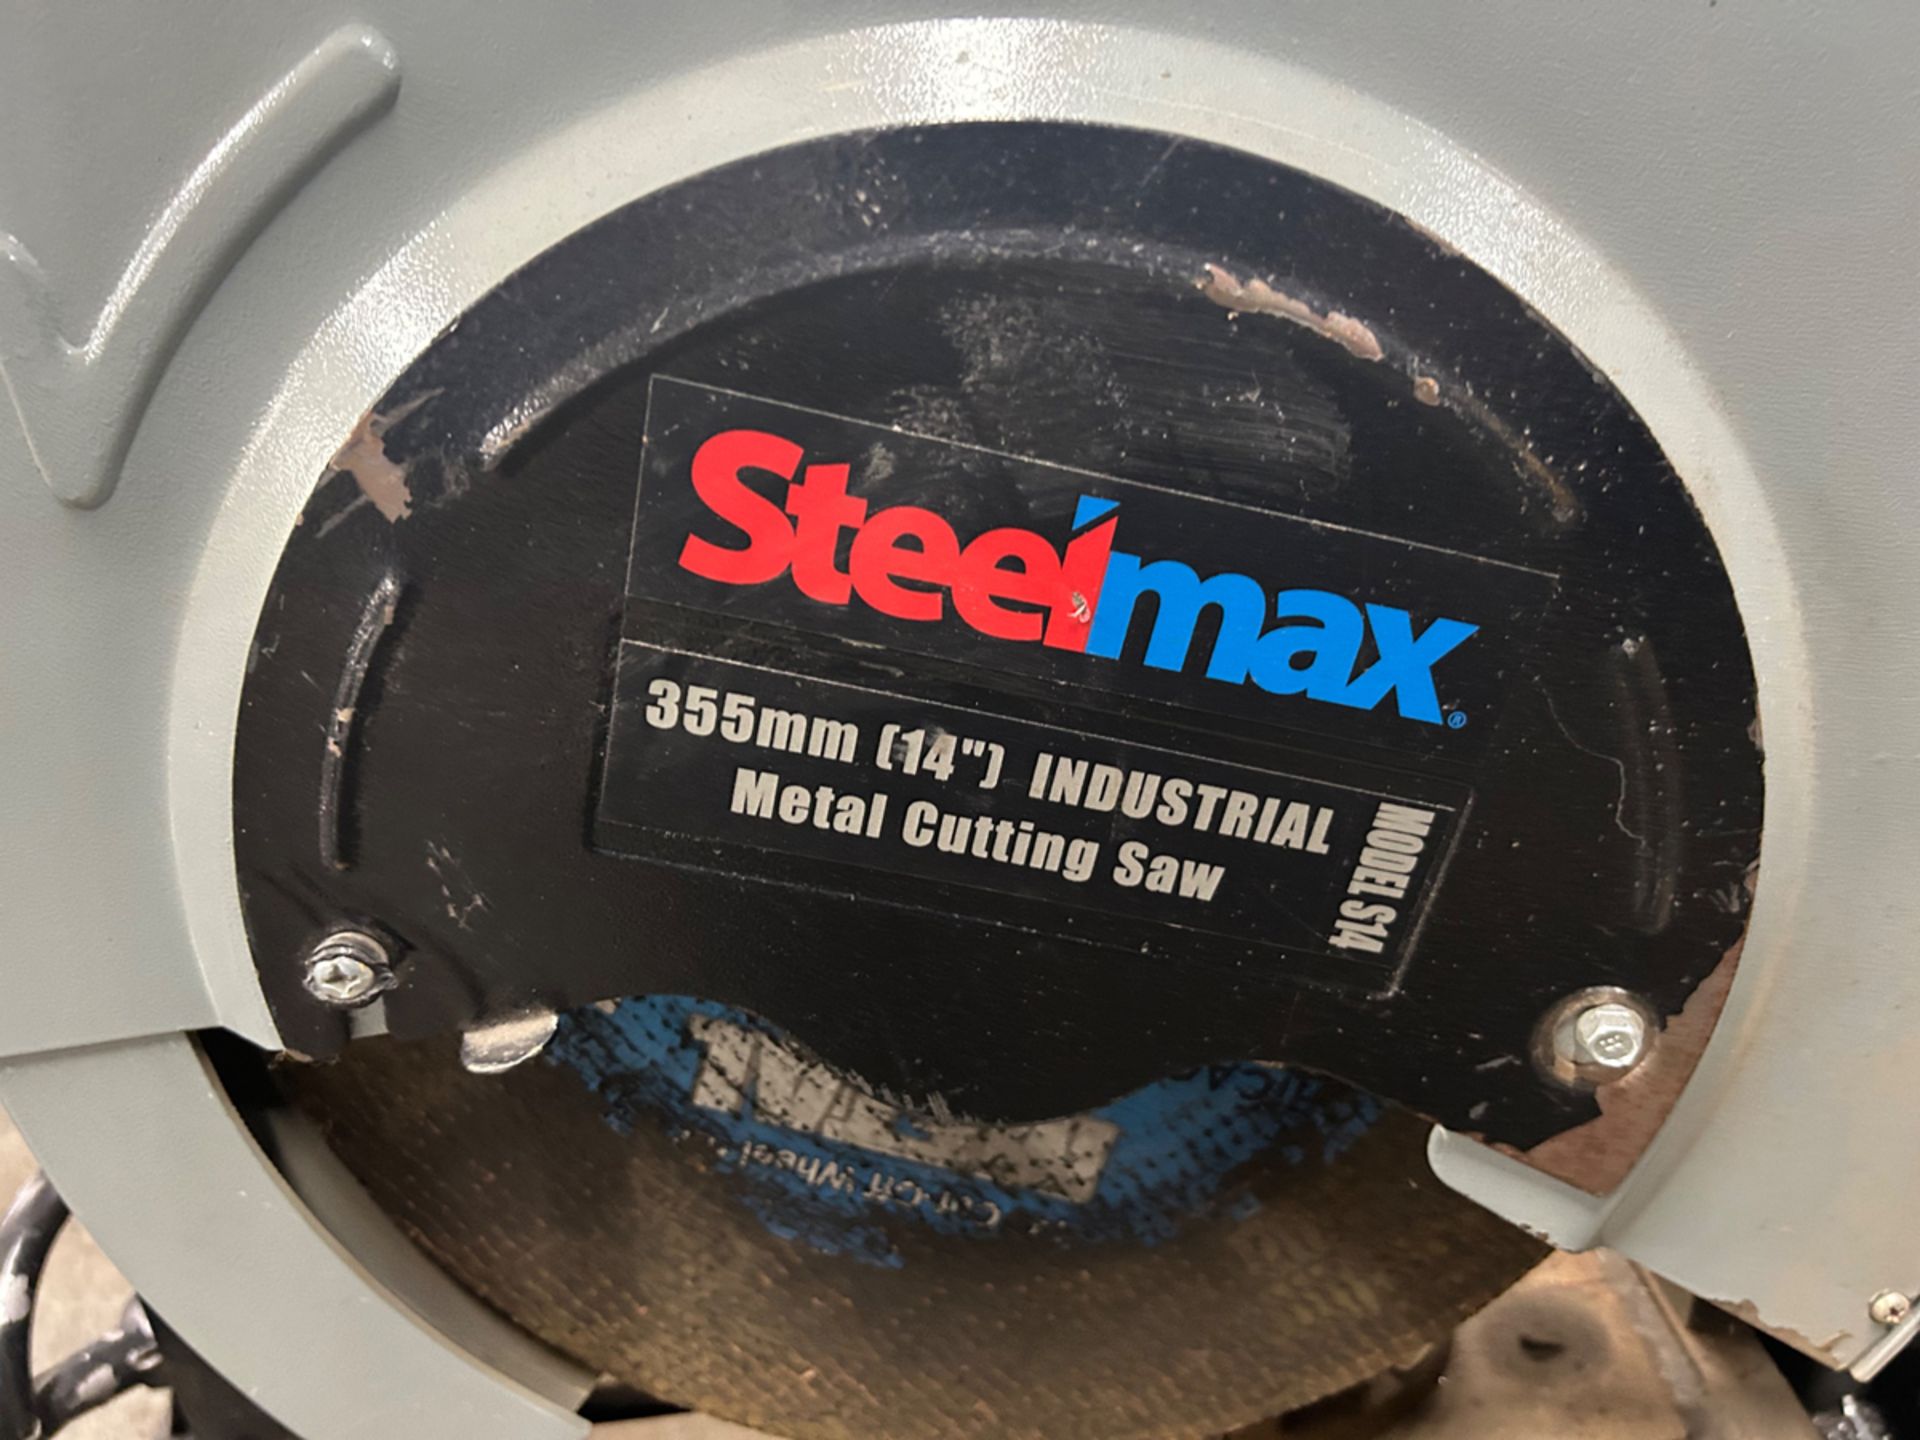 Steelmax Model s14 14" Metal Cutter - Image 5 of 5